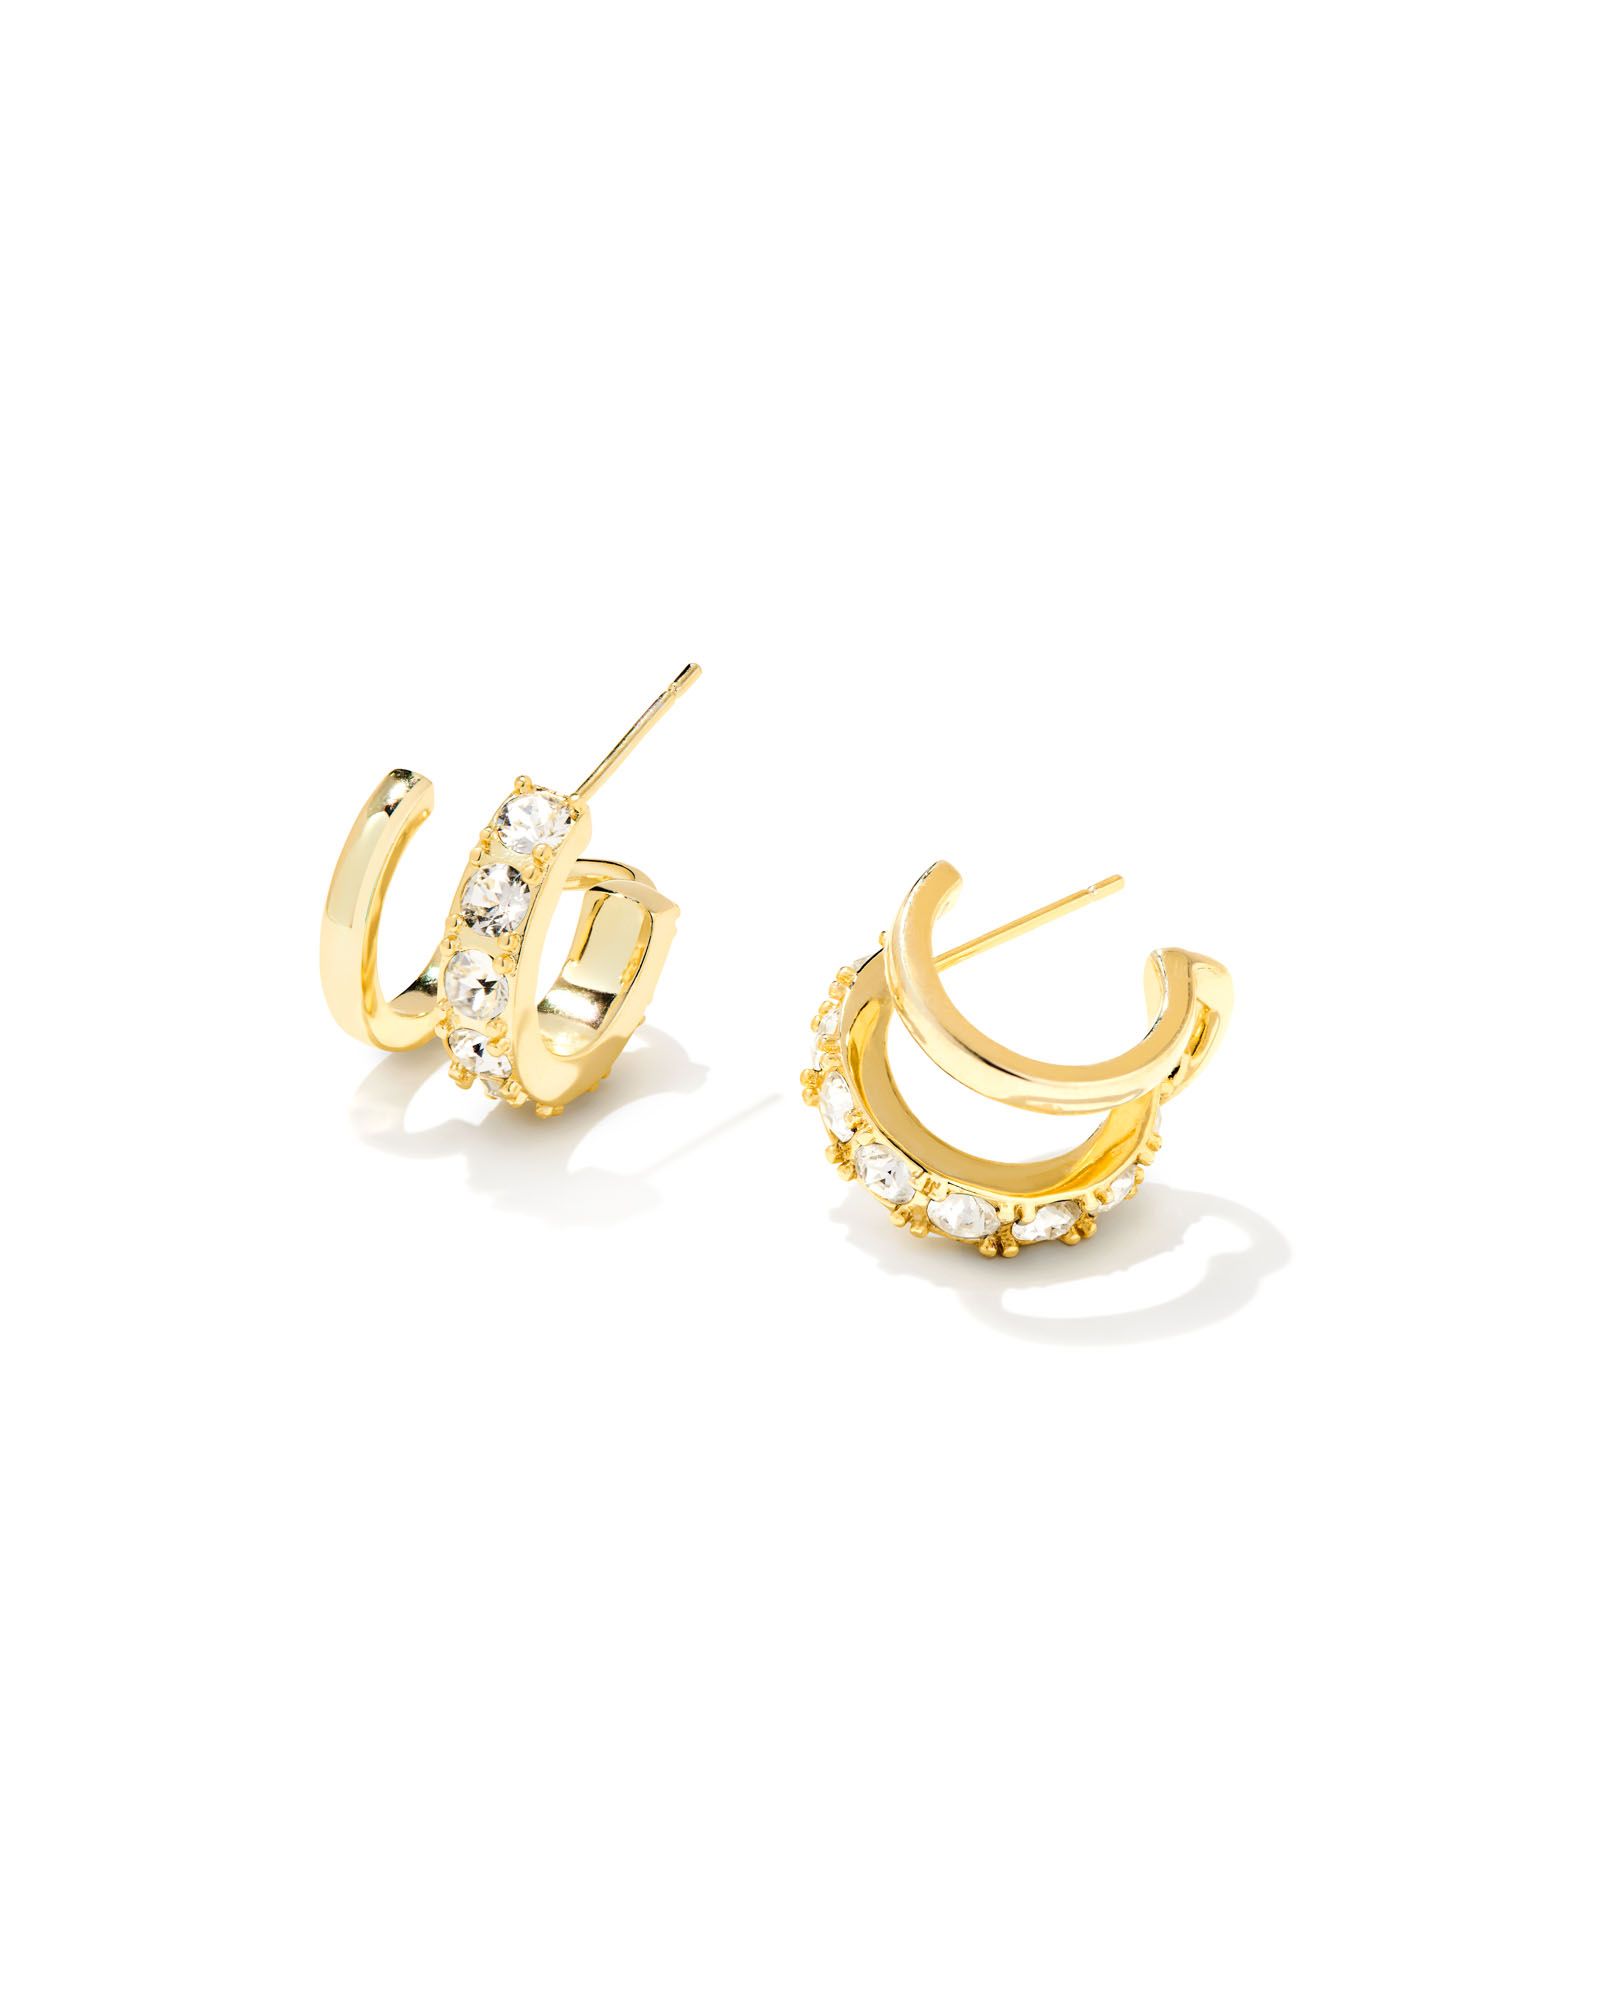 Kate Gold Huggie Earrings in White Crystal | Kendra Scott | Kendra Scott